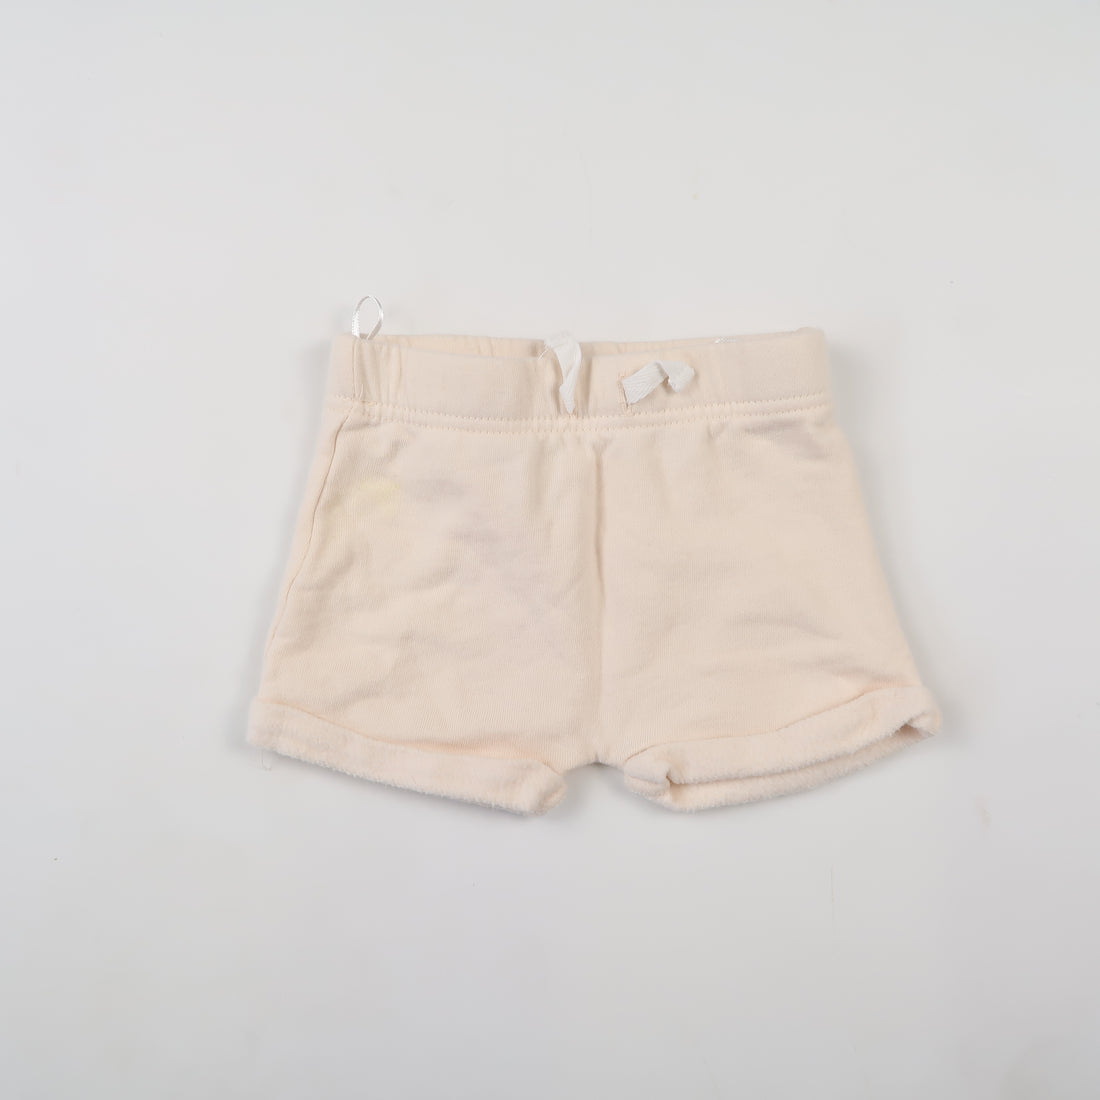 Indigo Baby - Shorts (0-3M)